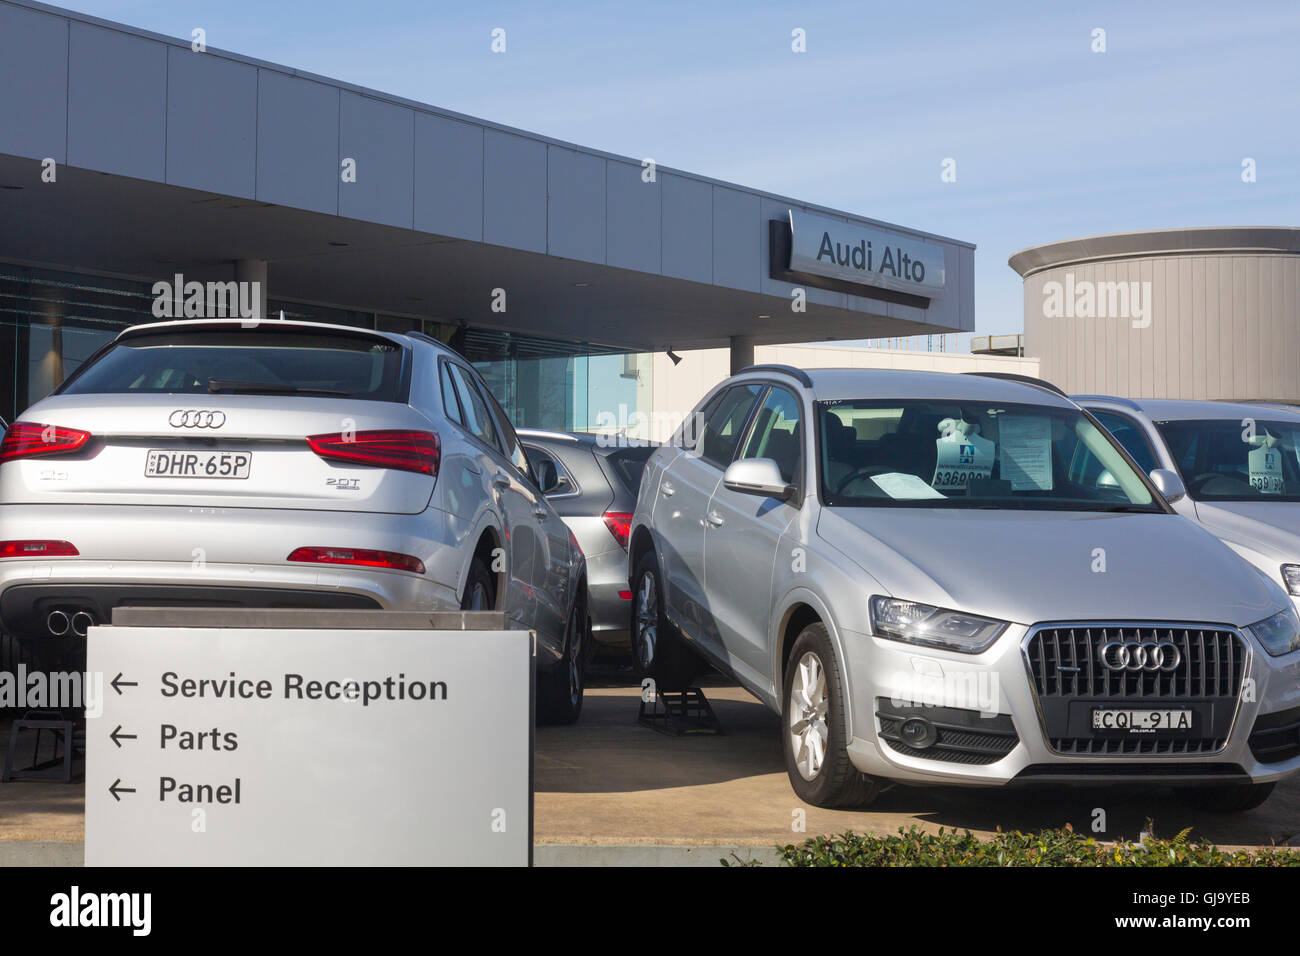 Alto Audi car dealership and service in Chatswood,North Sydney,Australia Stock Photo